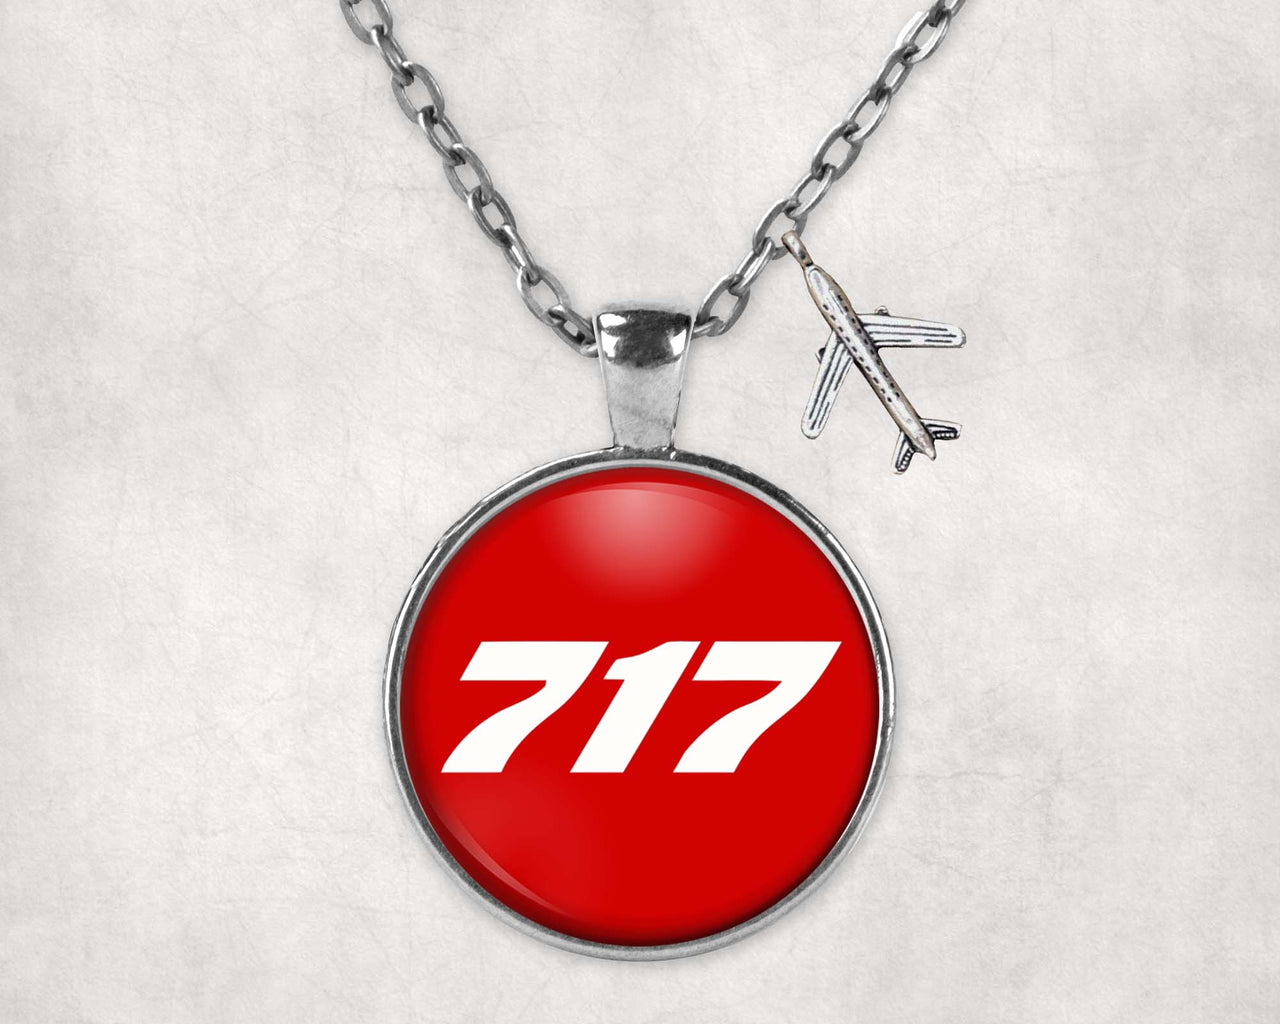 717 Flat Text Designed Necklaces